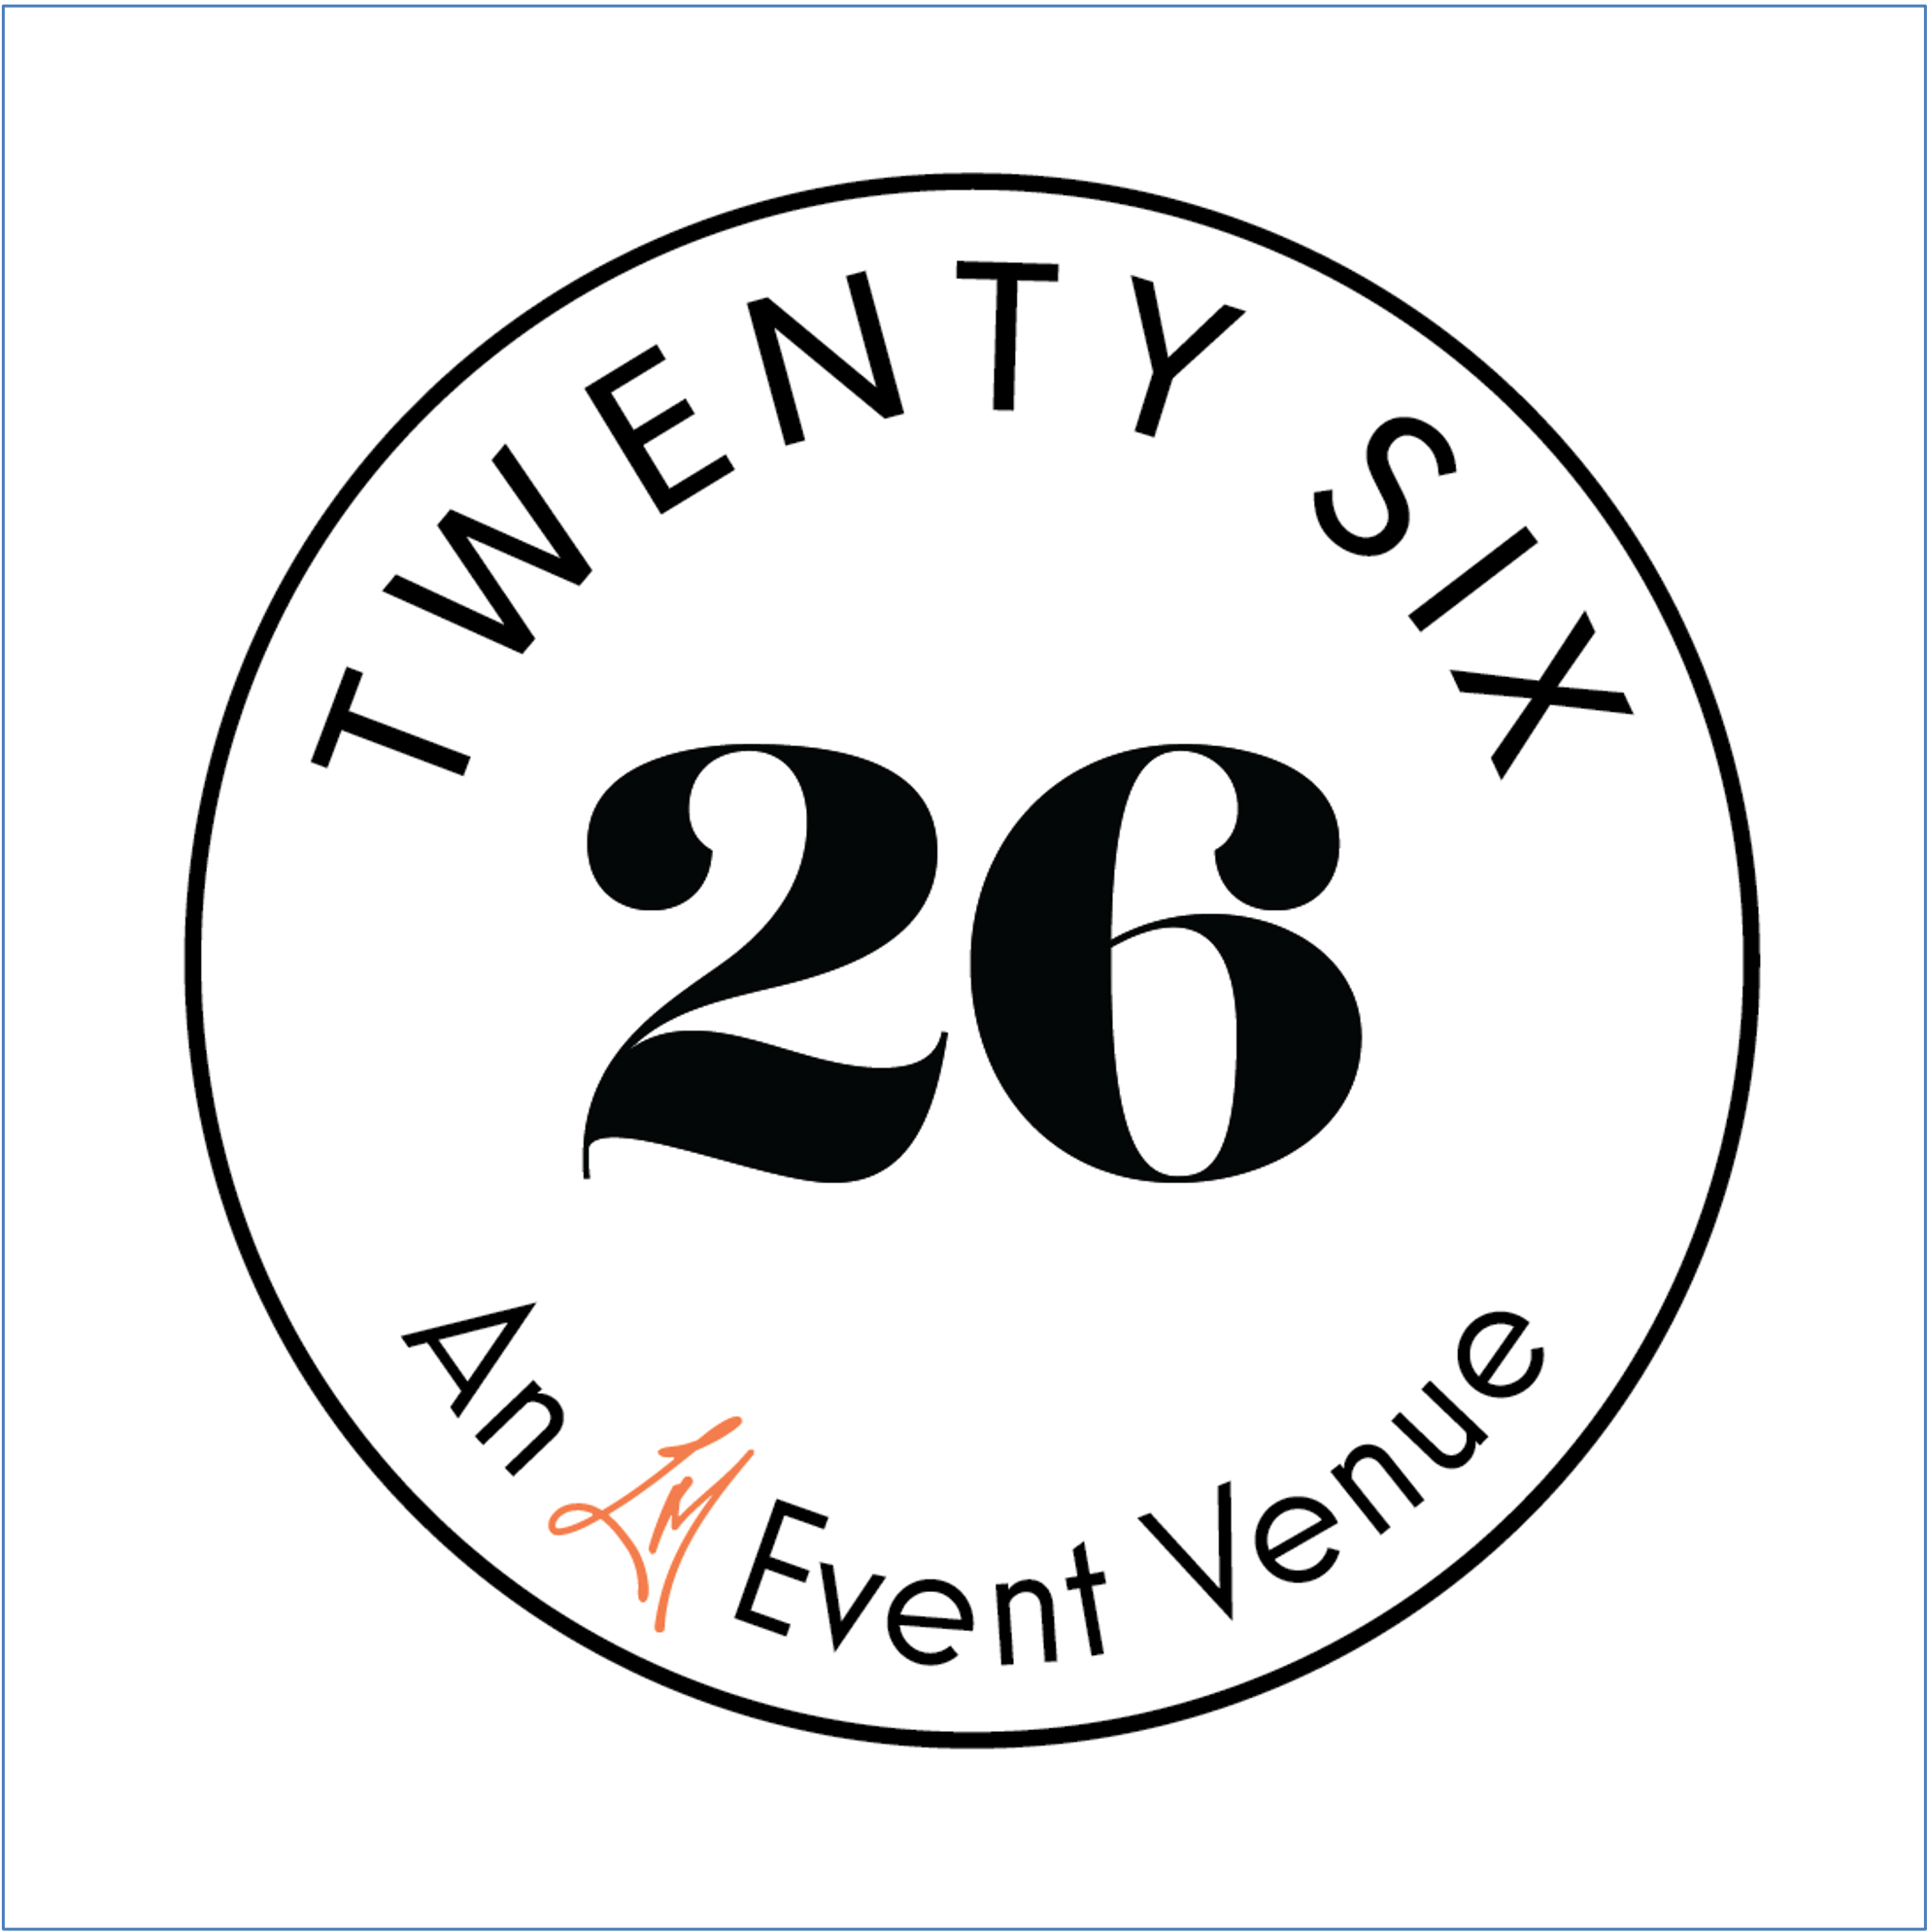 Twenty Six - An Event Venue